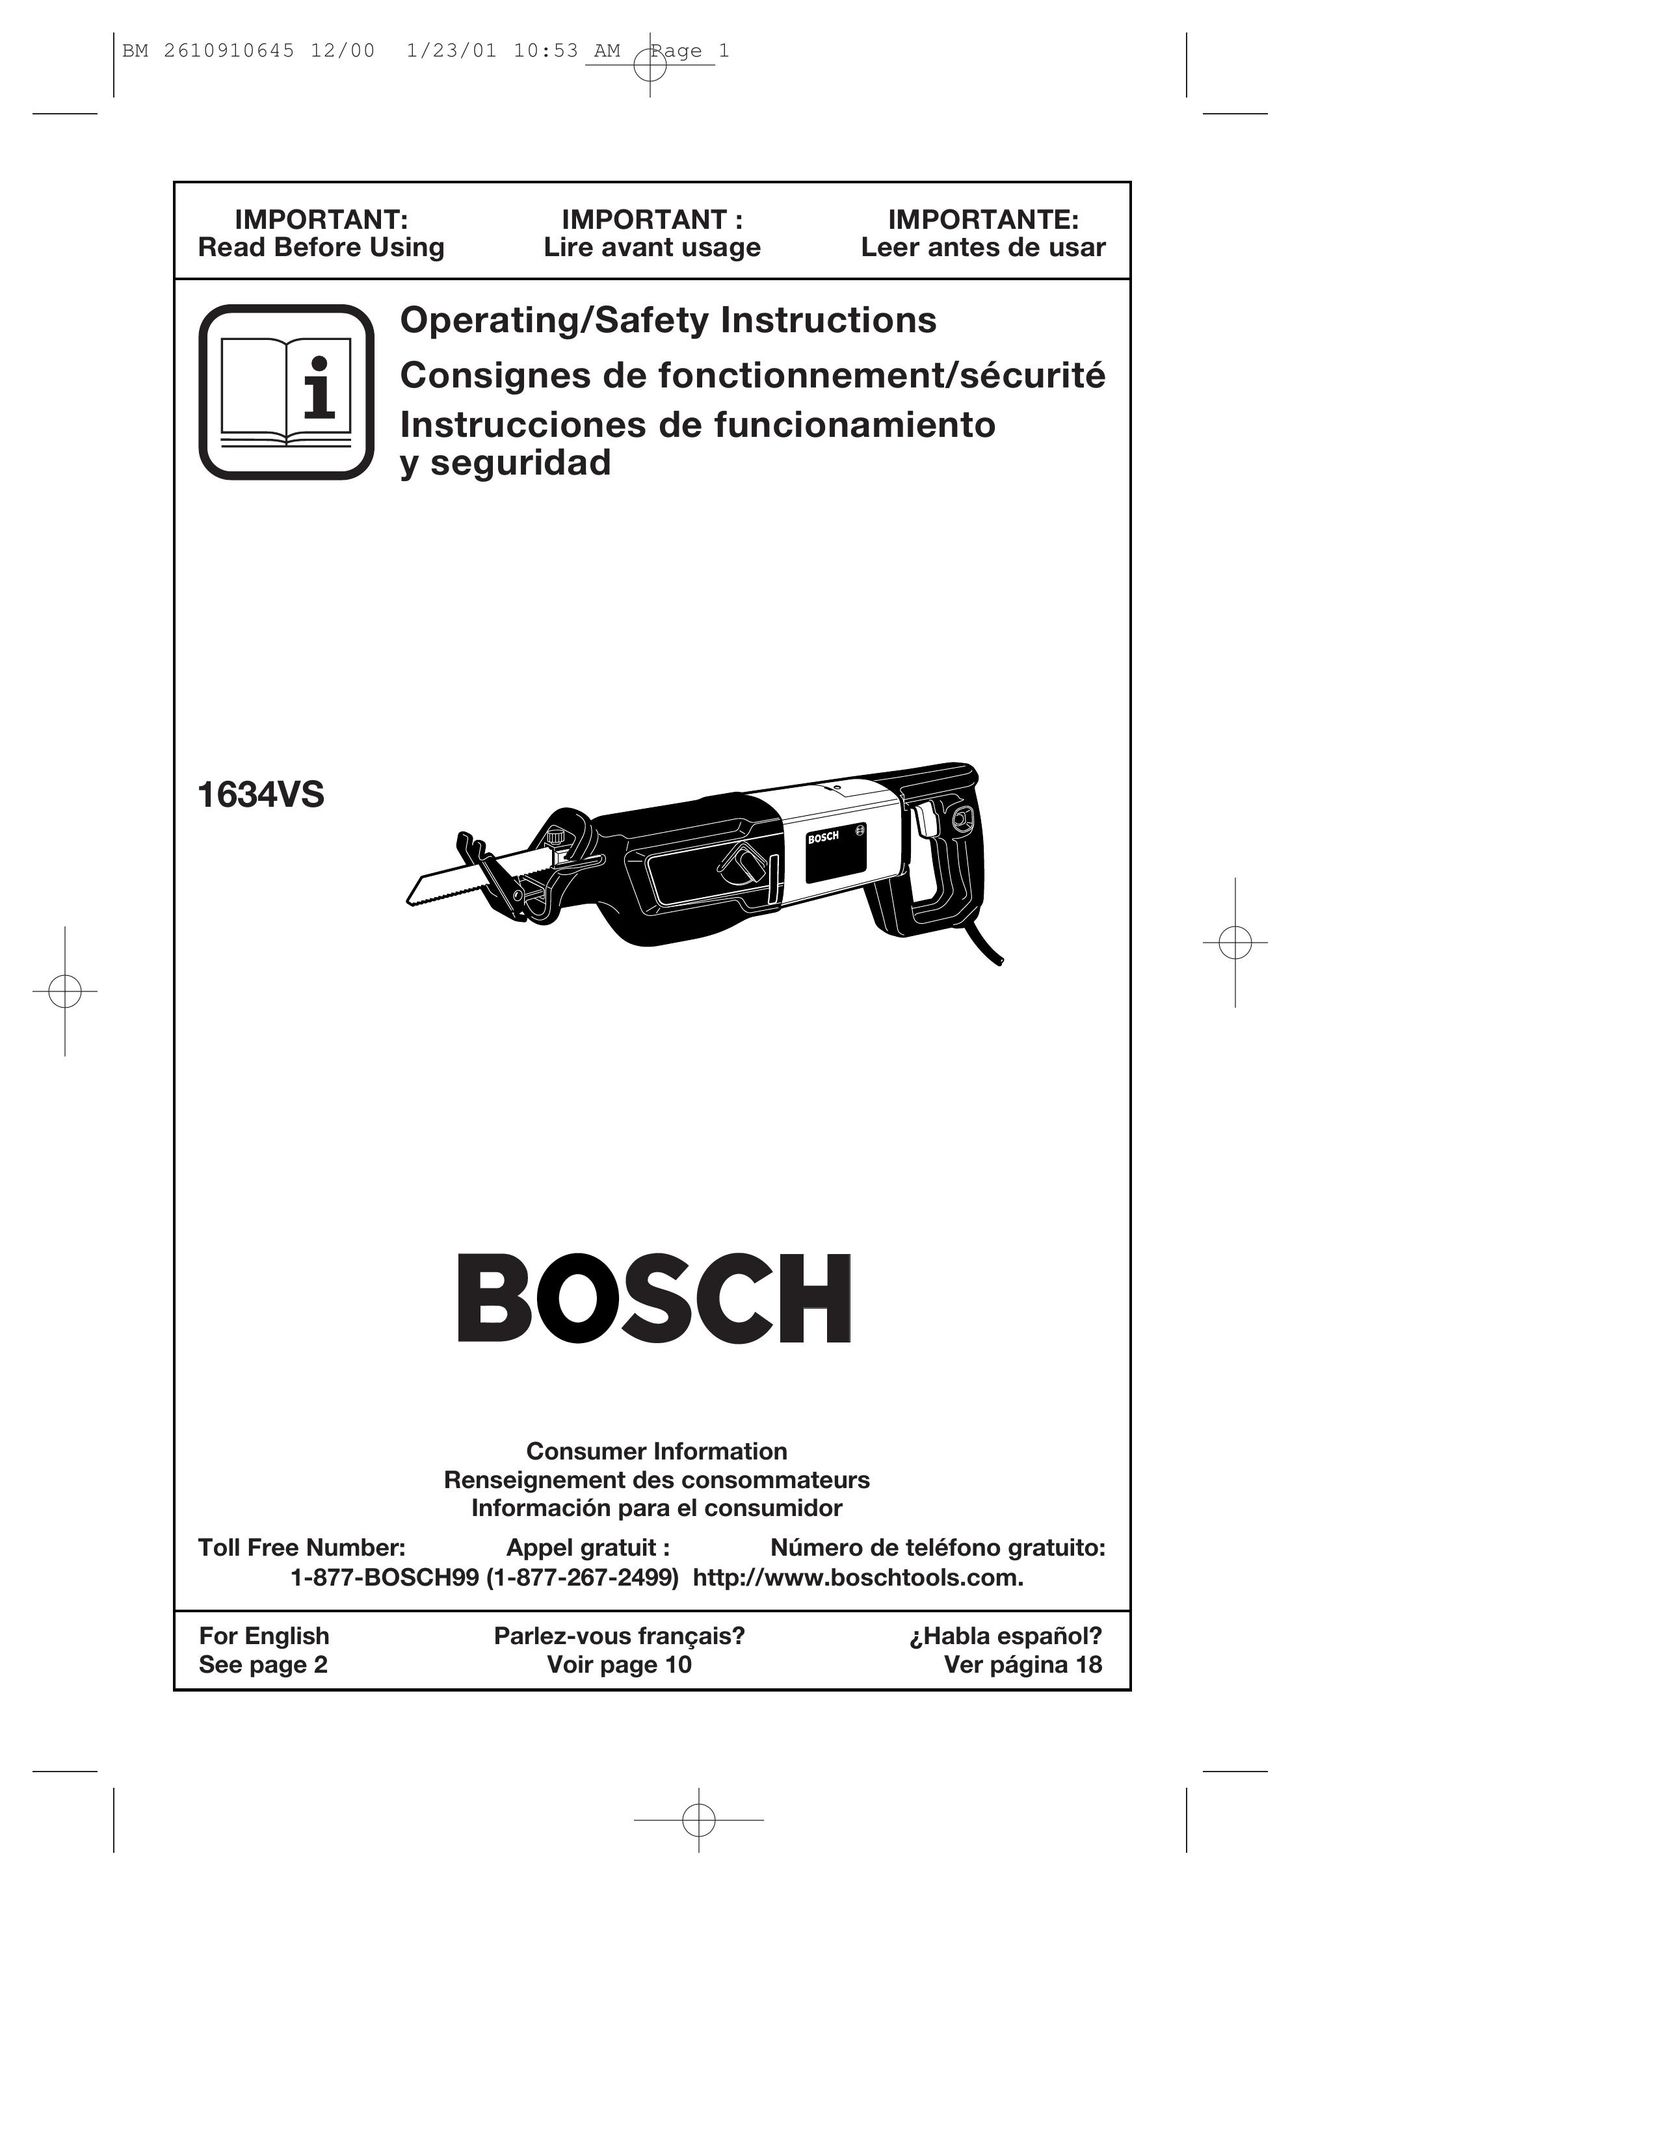 Bosch Power Tools 1634VS Cordless Saw User Manual